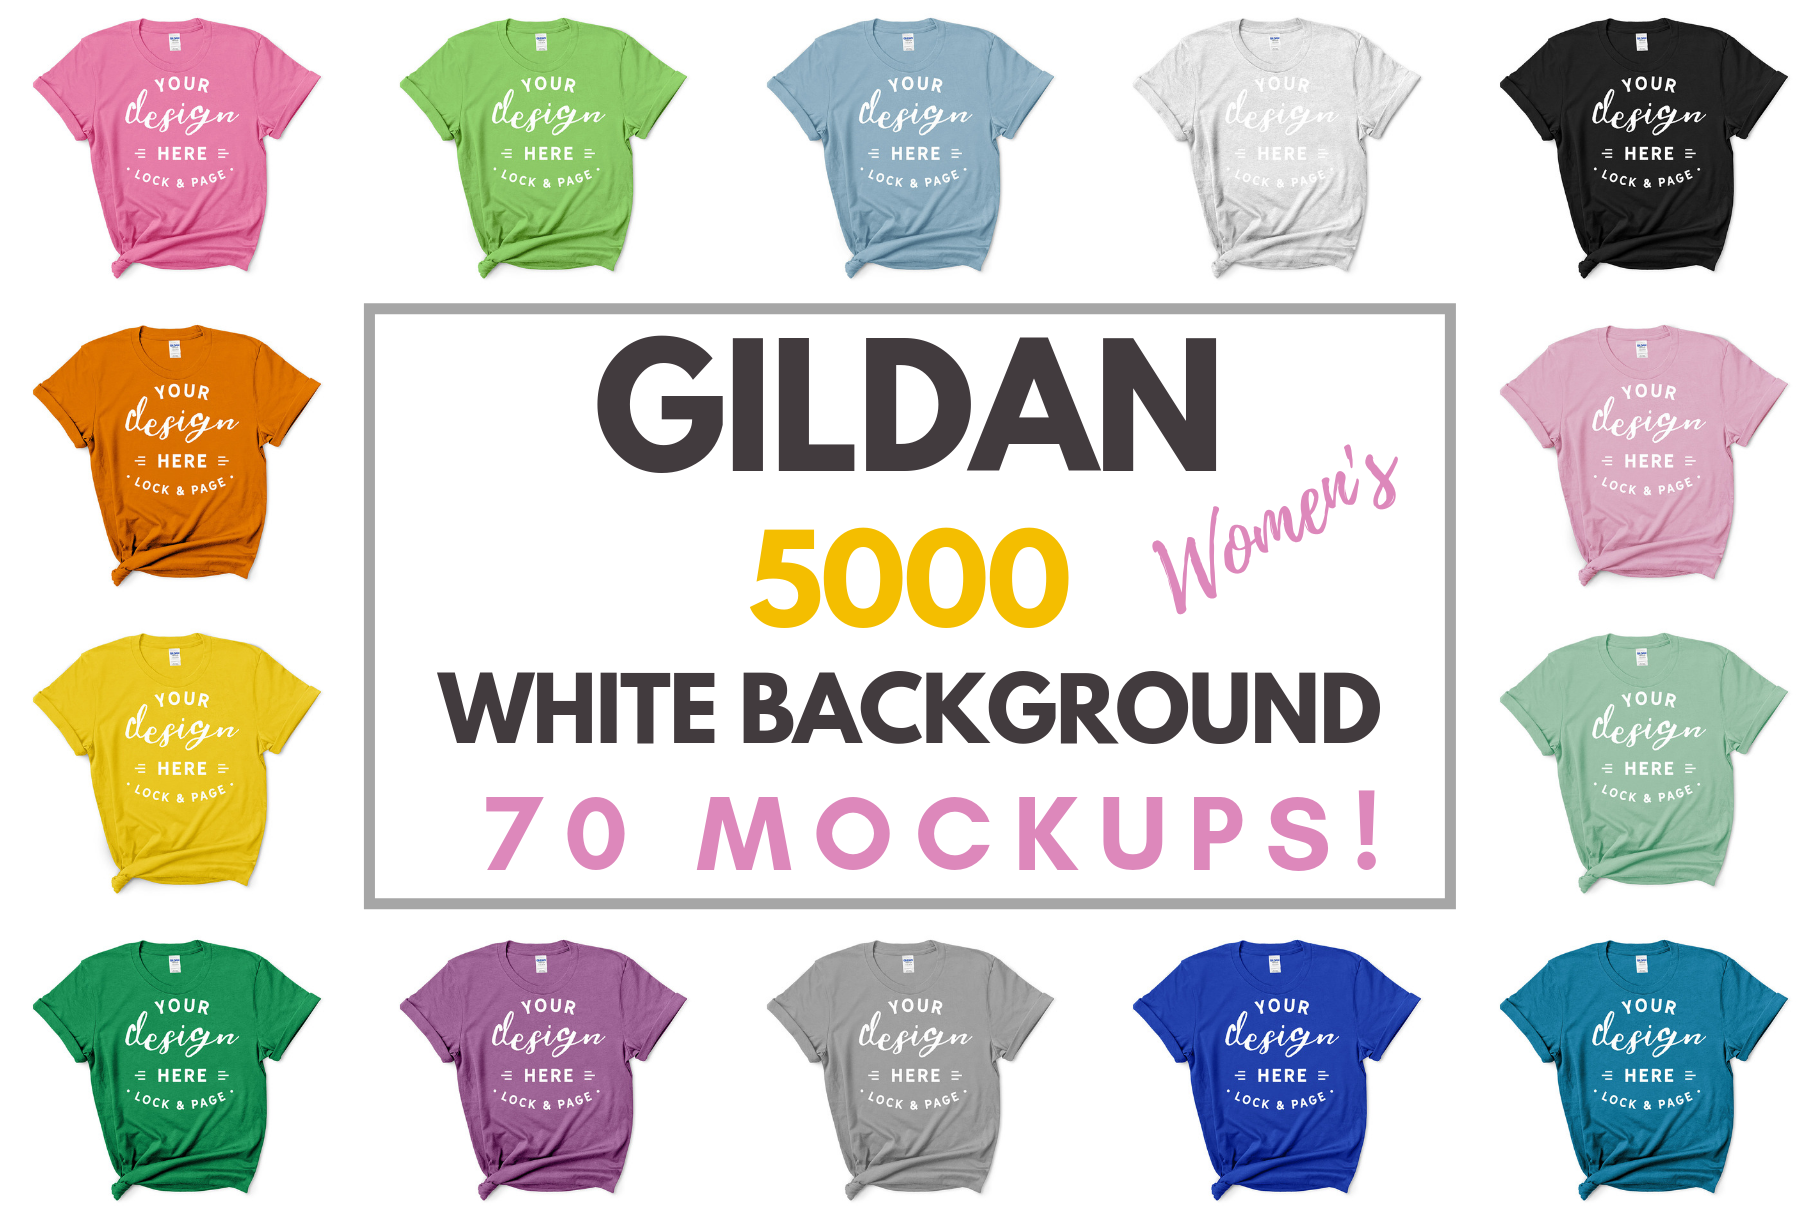 Download The Ultimate Tshirt Mockup Mega Bundle Bella Canvas Next Level Gildan By Lock And Page Thehungryjpeg Com